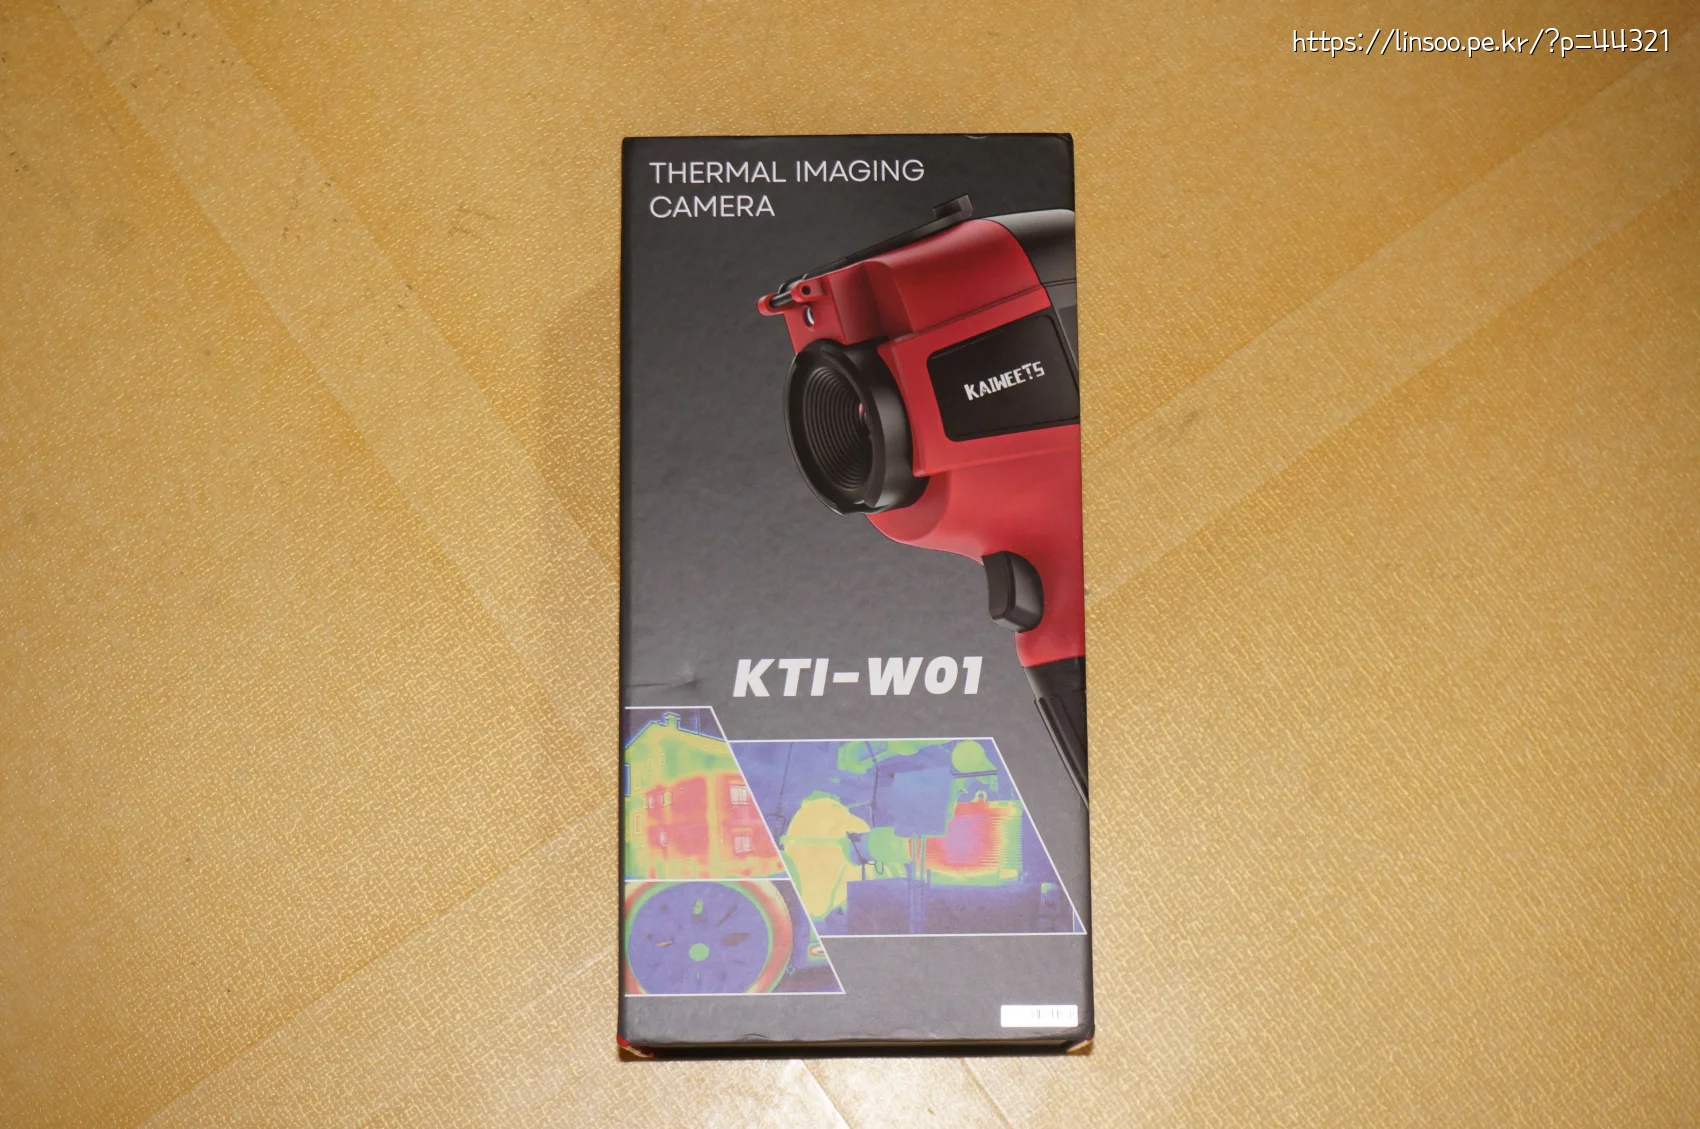 KAIWEETS KTI-W01 열화상 카메라 박스 전면